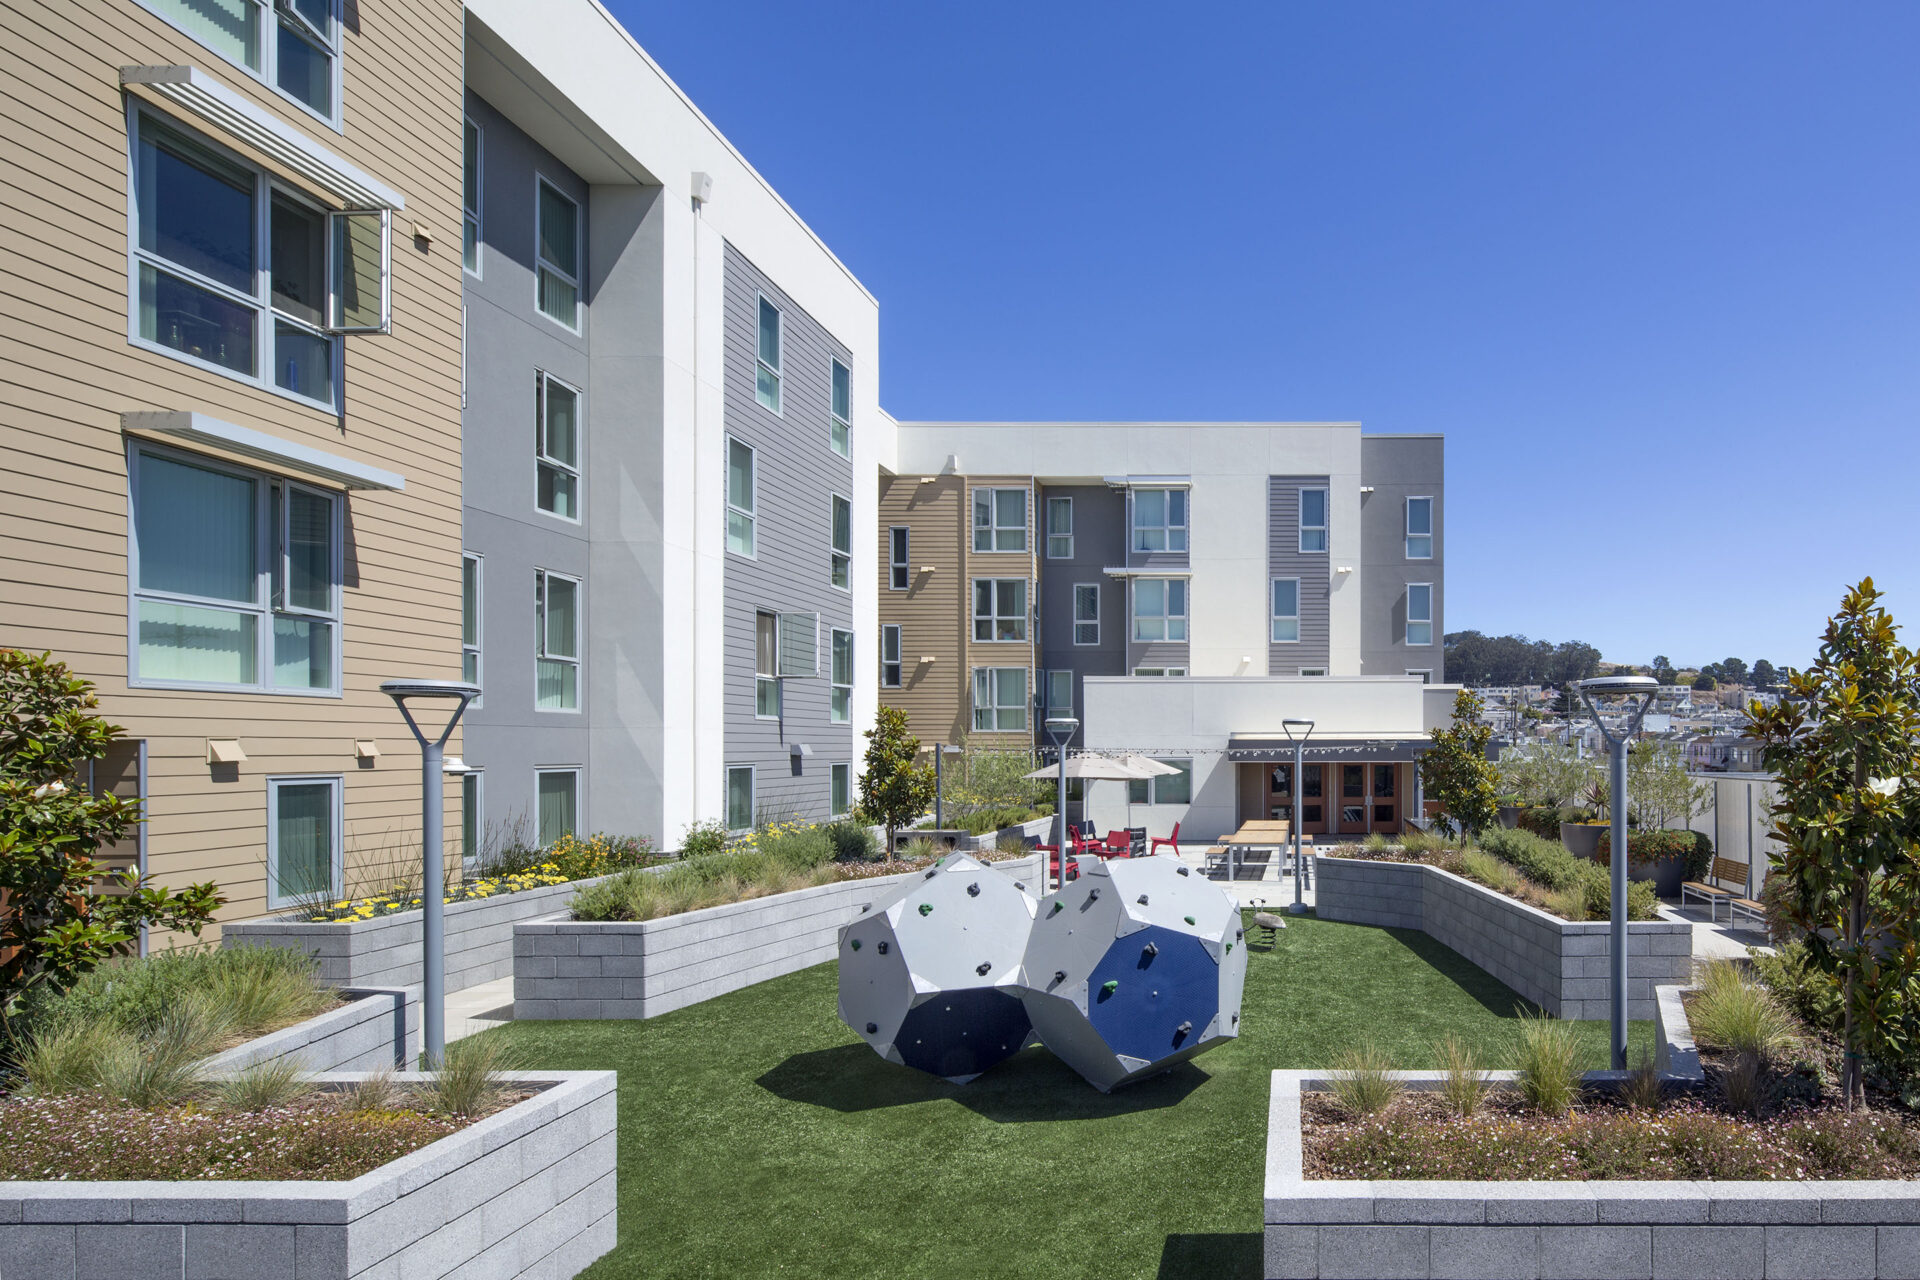 Cahill Contractors Affordable Housing Experience: Sunnydale Parcel Q